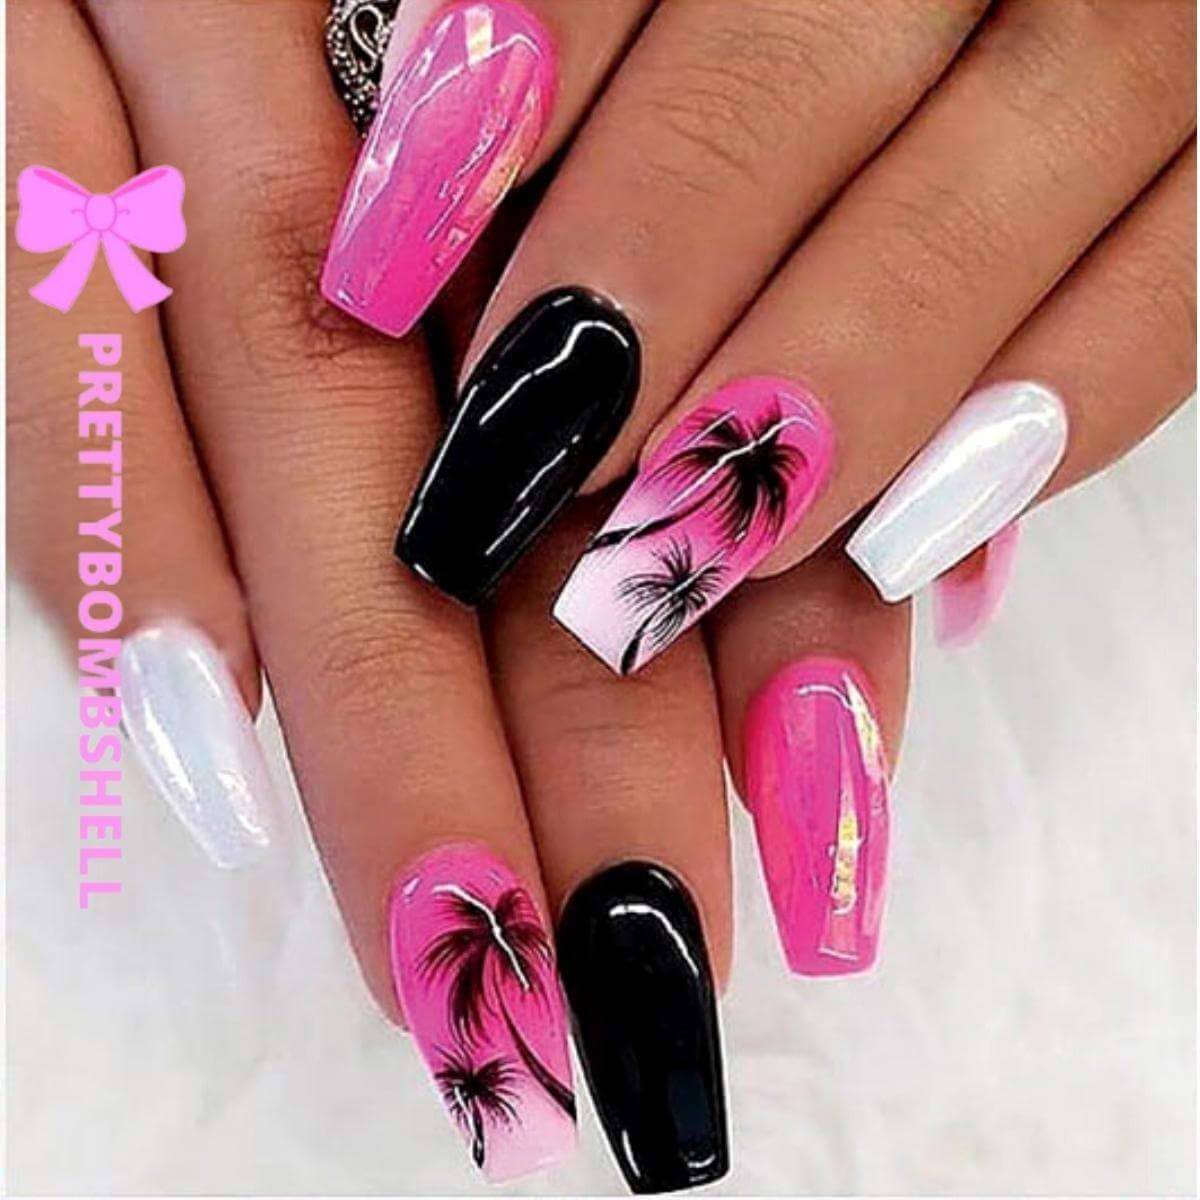 Palm Tree Nails